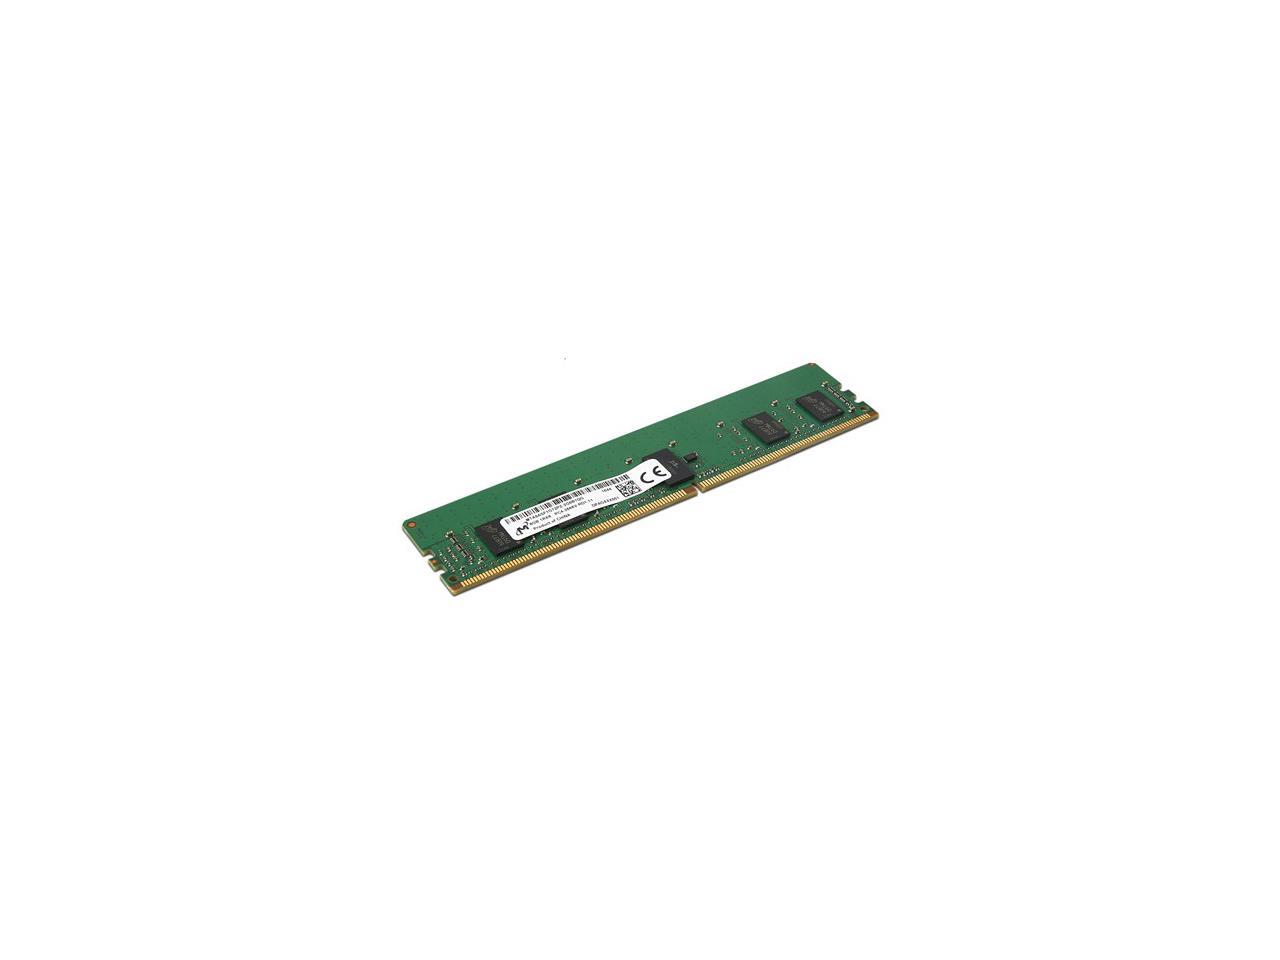 Lenovo 8GB 288-Pin DDR4 SDRAM ECC Registered DDR4 2666 (PC4 21300) Memory (System Specific Memory) Model 4X70P98201